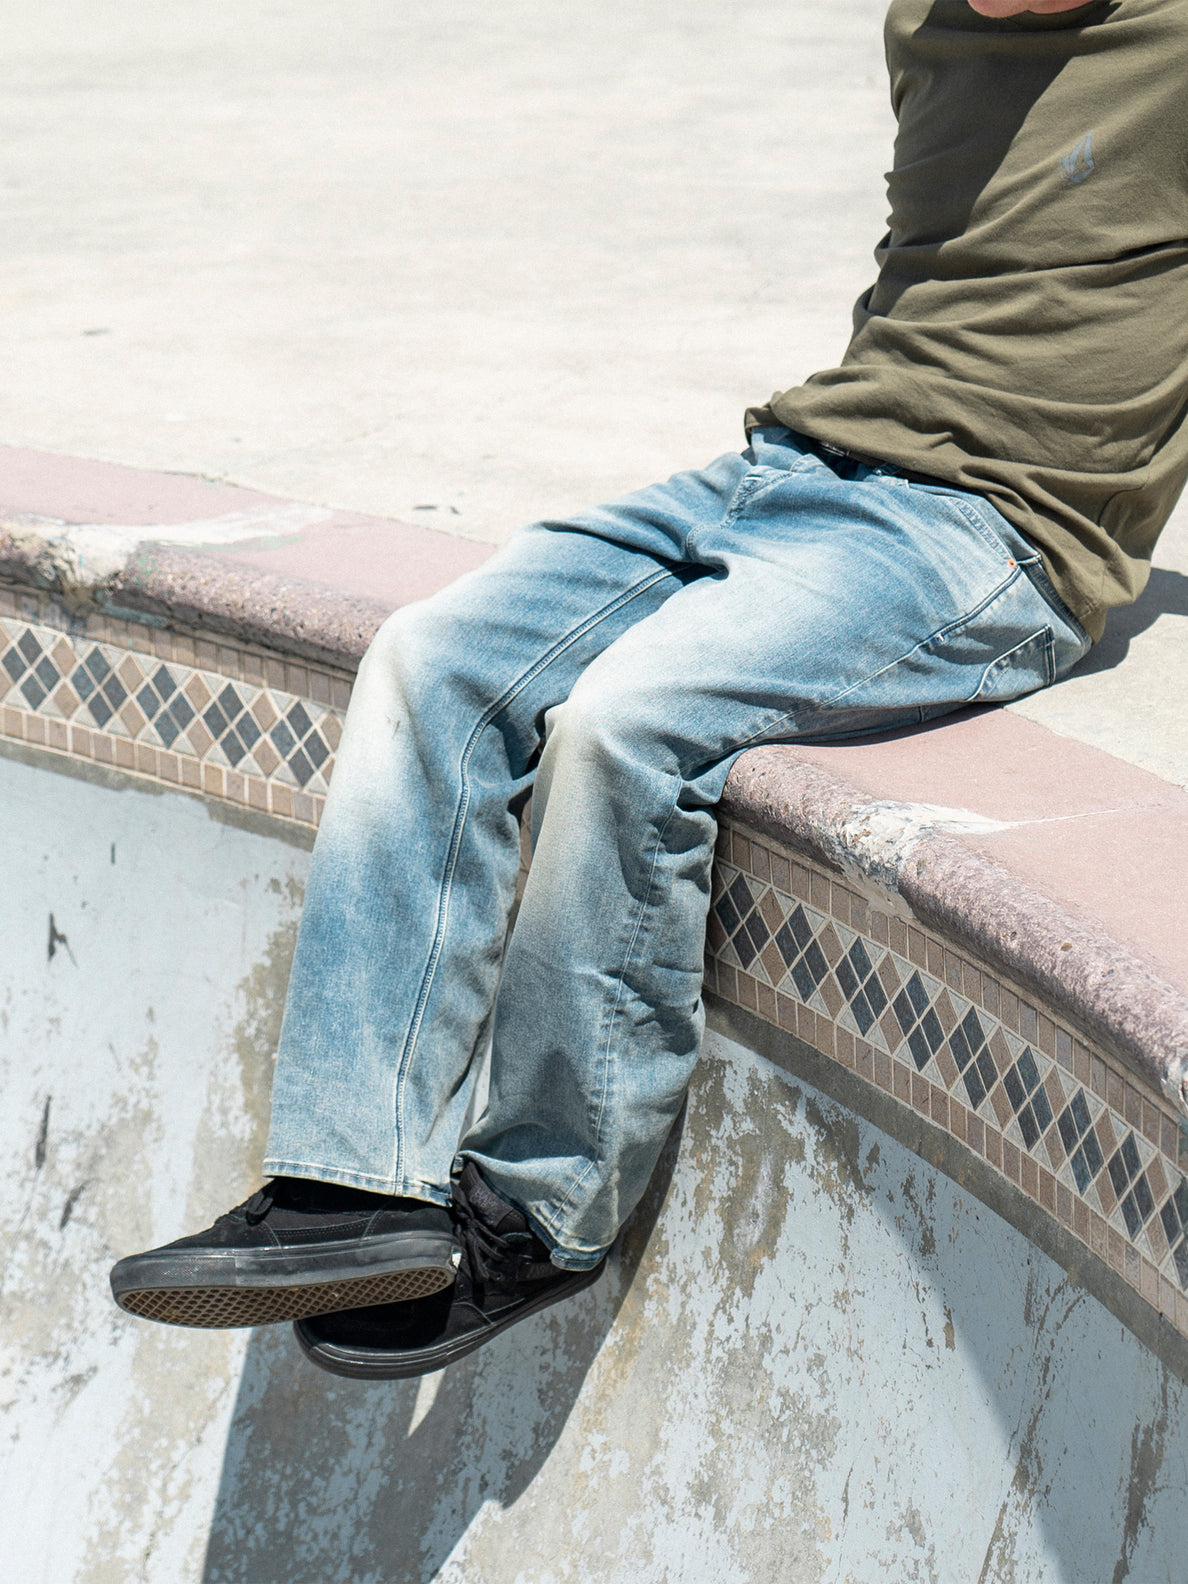 Modown Relaxed Jeans - Sandy Indigo